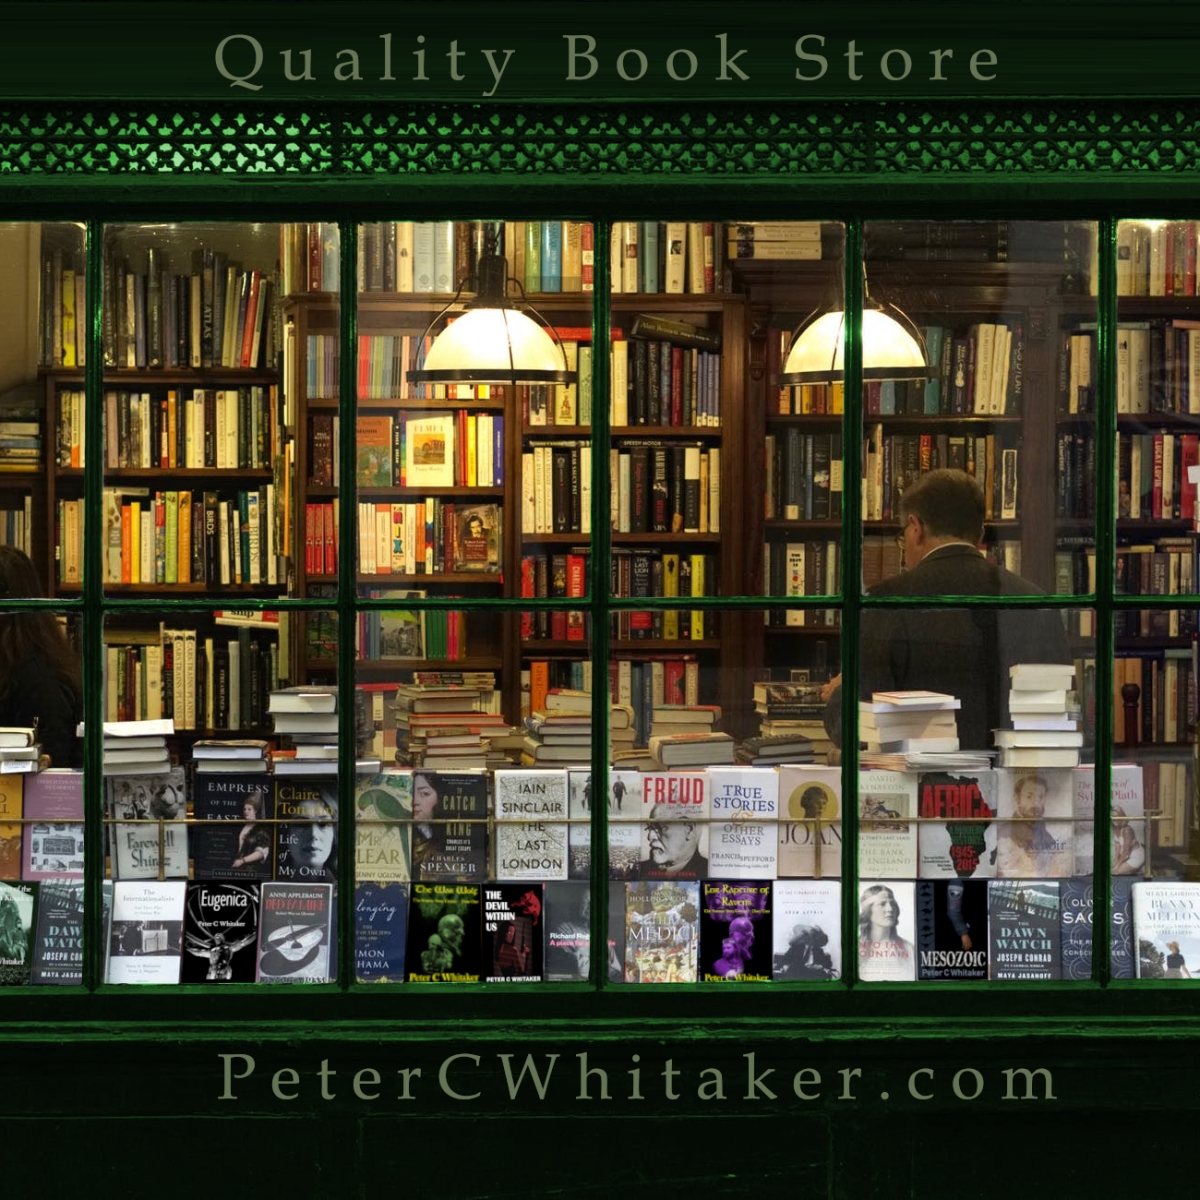 A Quality Book Shop